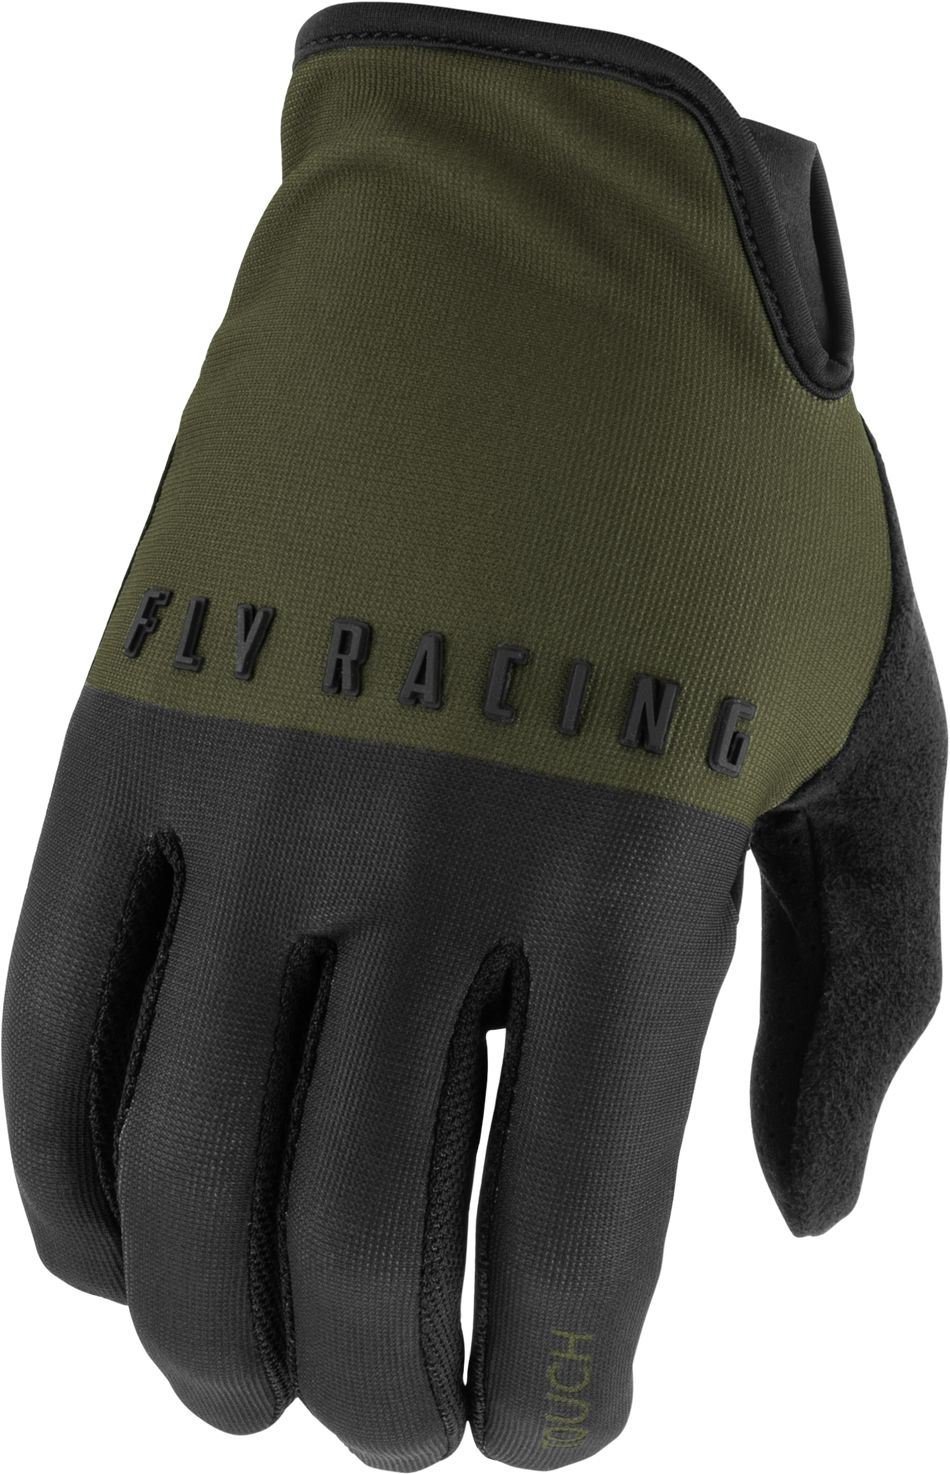 FLY RACING Media Gloves Dark Forest/Black Lg 350-0122L